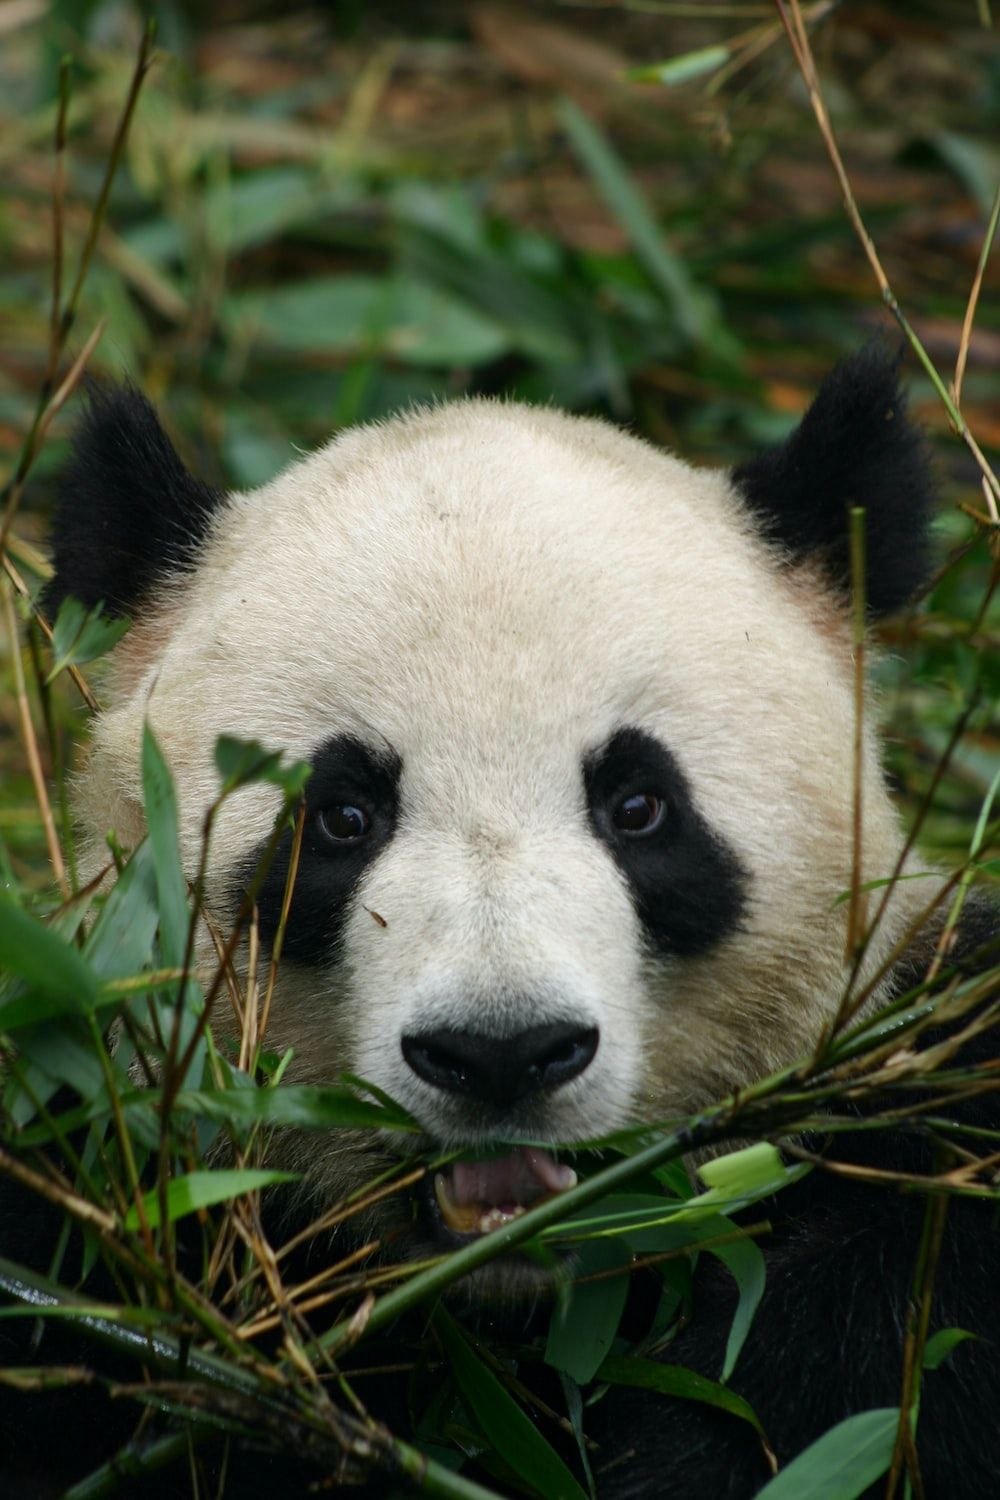 A panda bear is eating some leaves - Panda